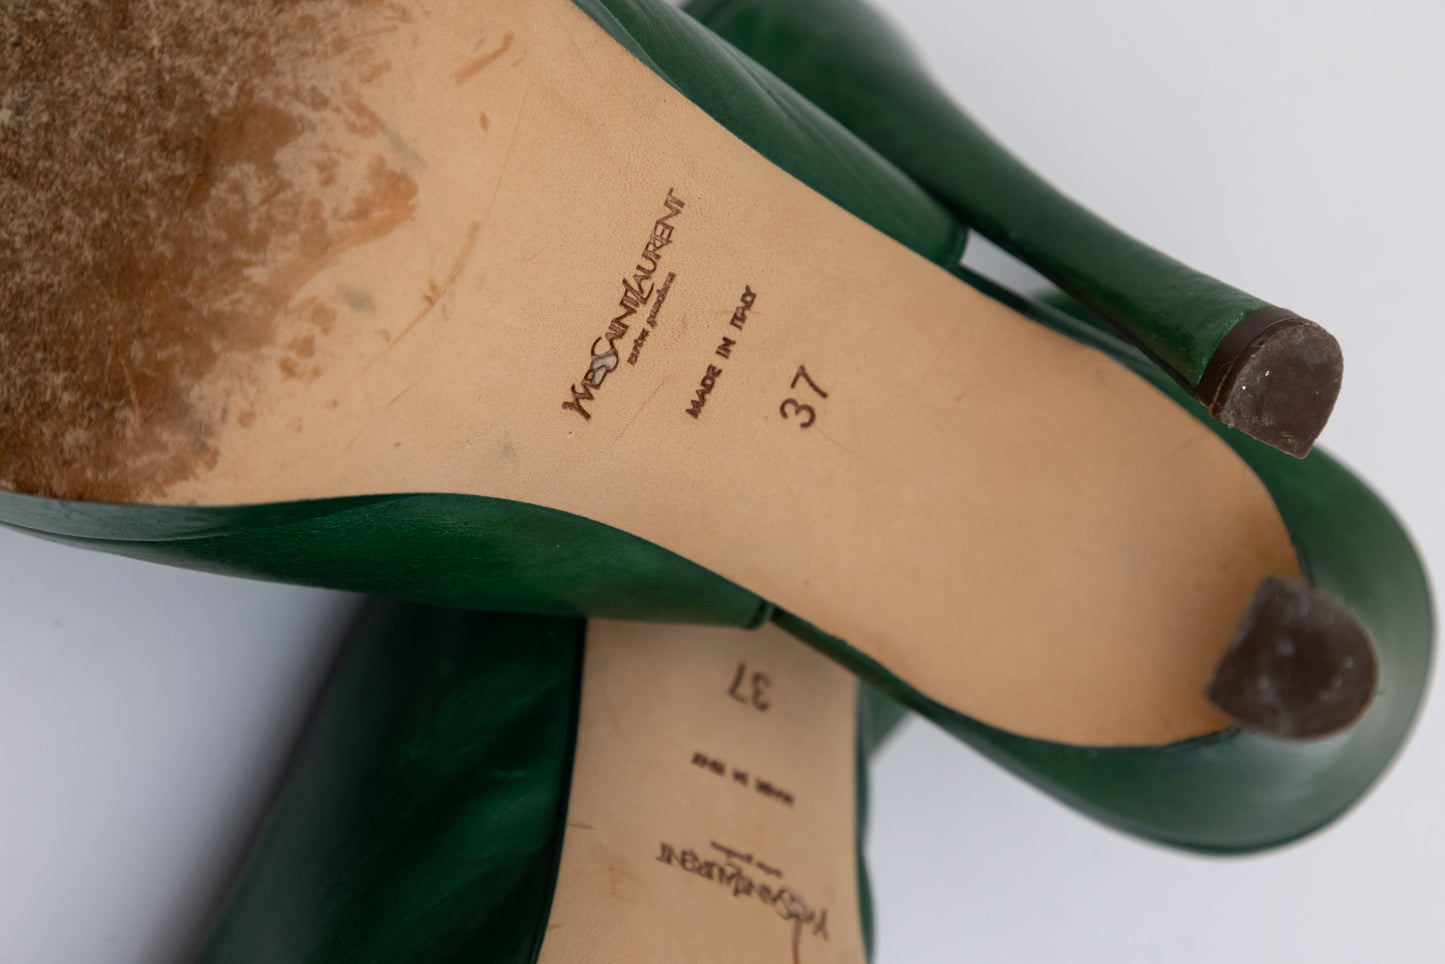 YVES SAINT LAURENT Green Leather Sling-back Pumps Heels